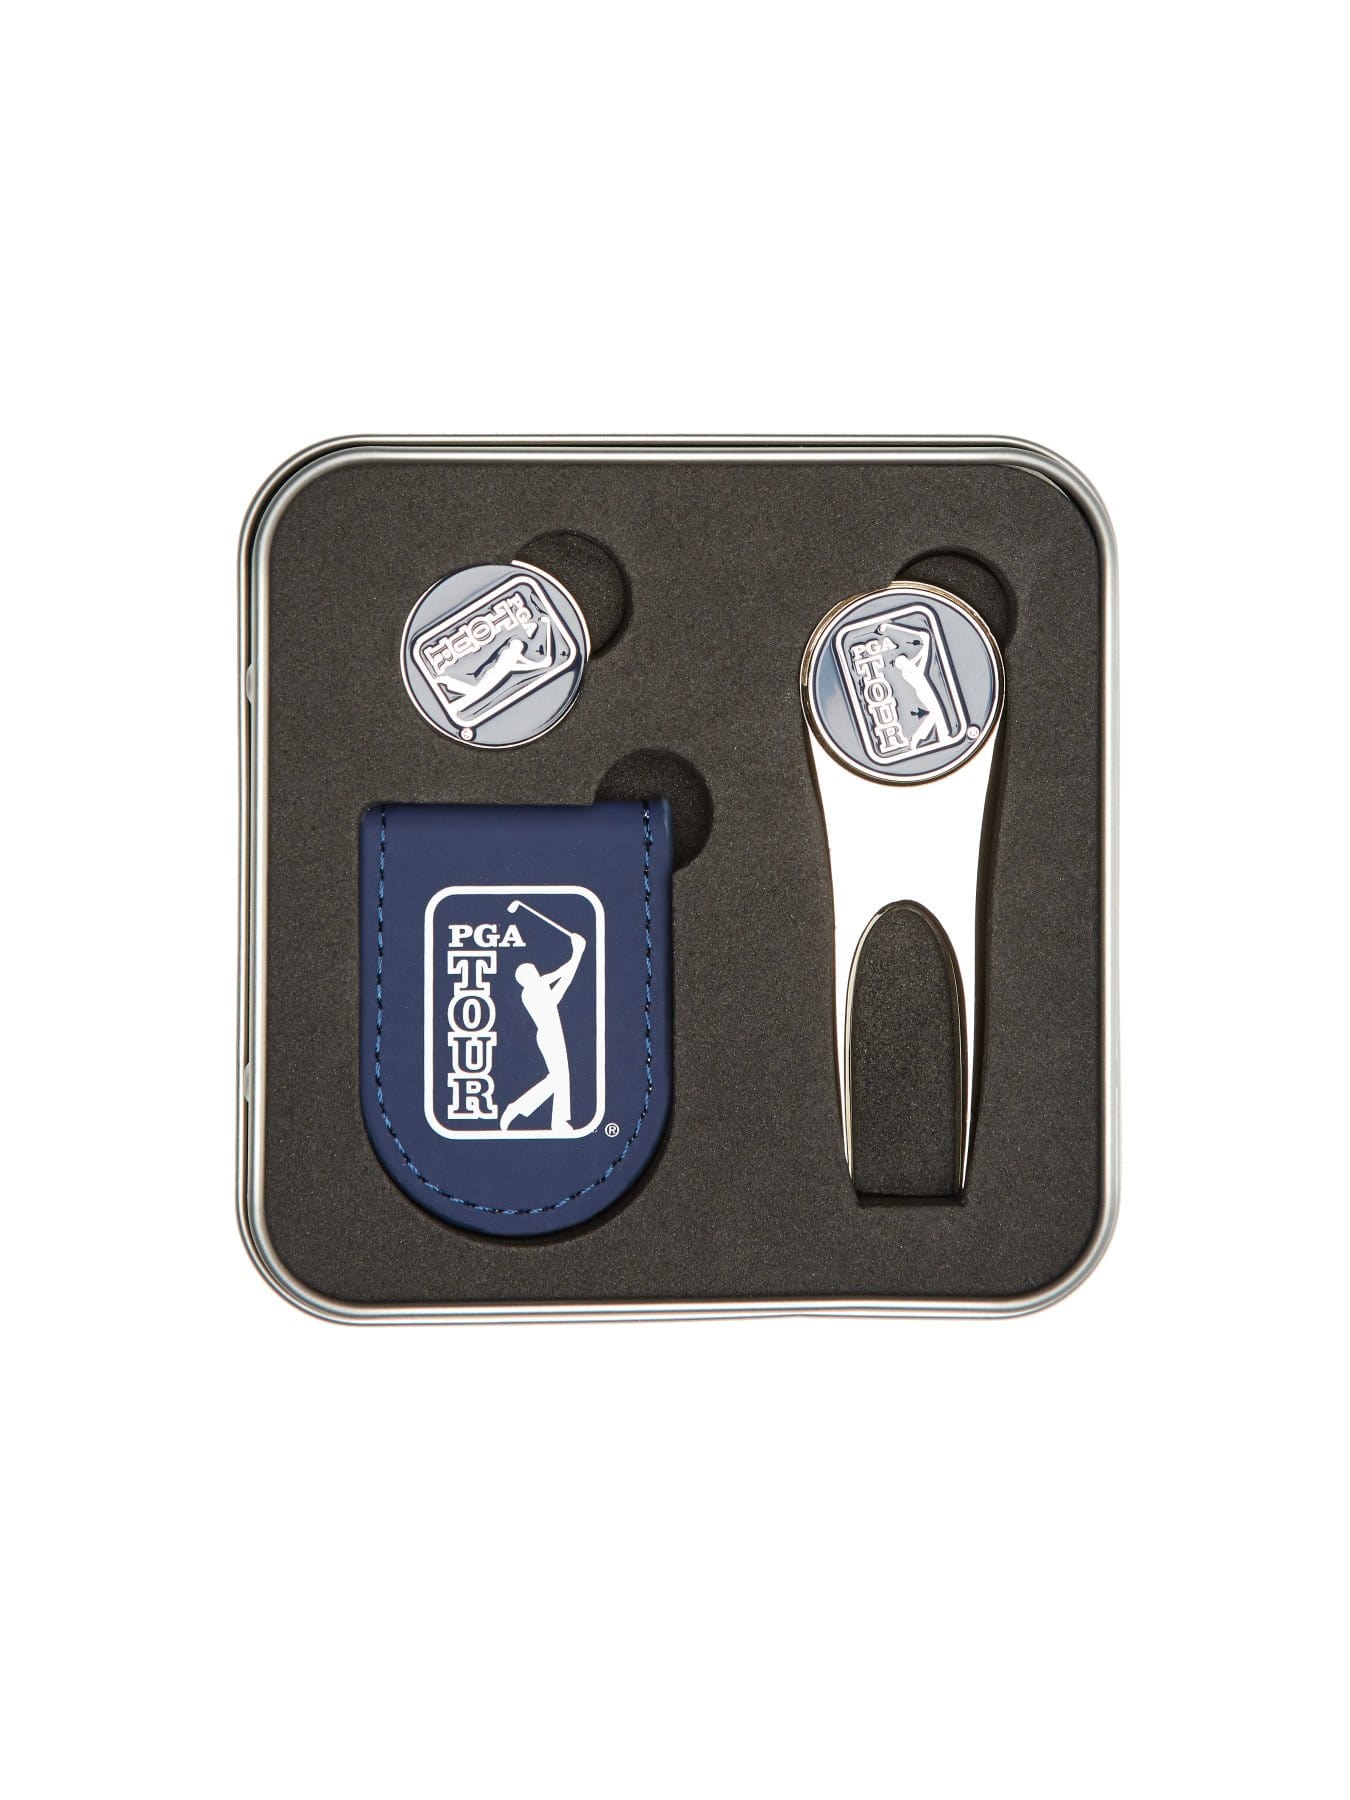 PGA TOUR Apparel Pocket Clip Tin Gift Set, Dark Navy Blue, 100% Pu | Golf Apparel Shop